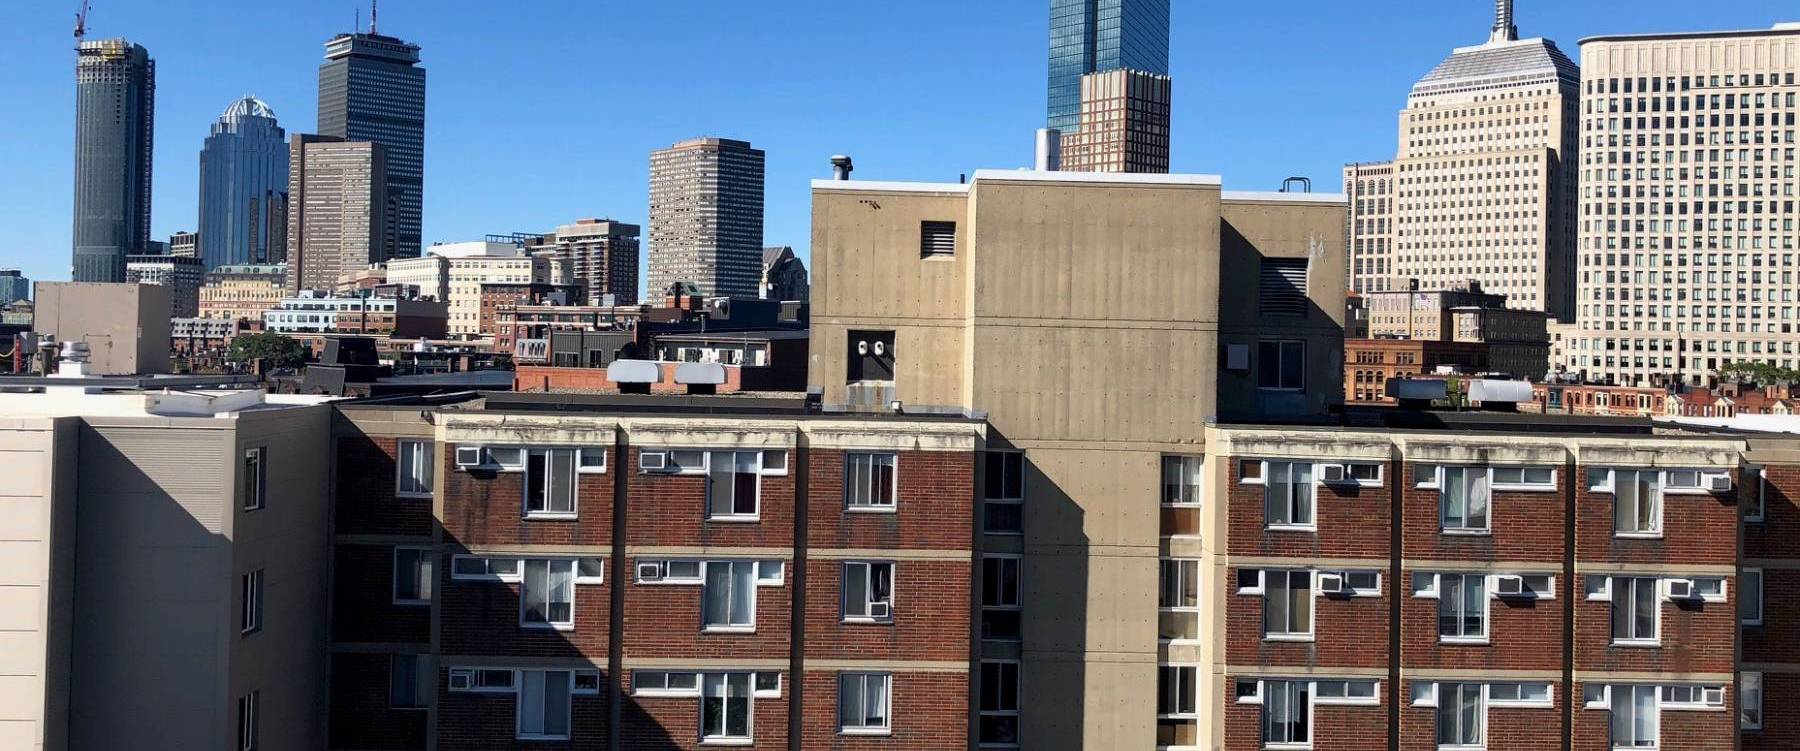 Boston apartment buildings before renovation